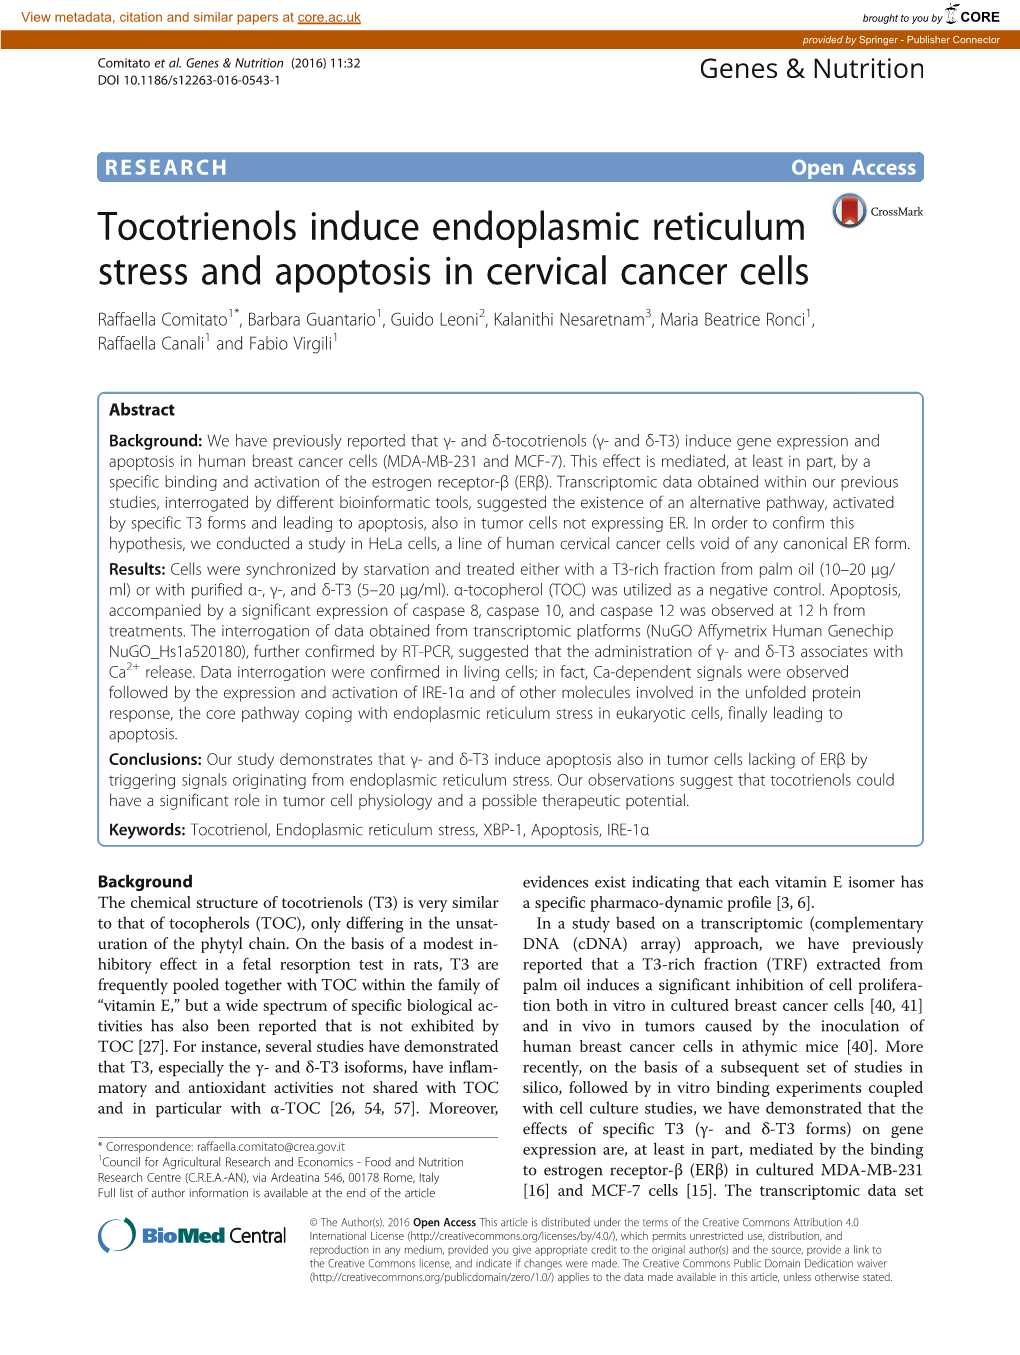 Tocotrienols Induce Endoplasmic Reticulum Stress and Apoptosis In